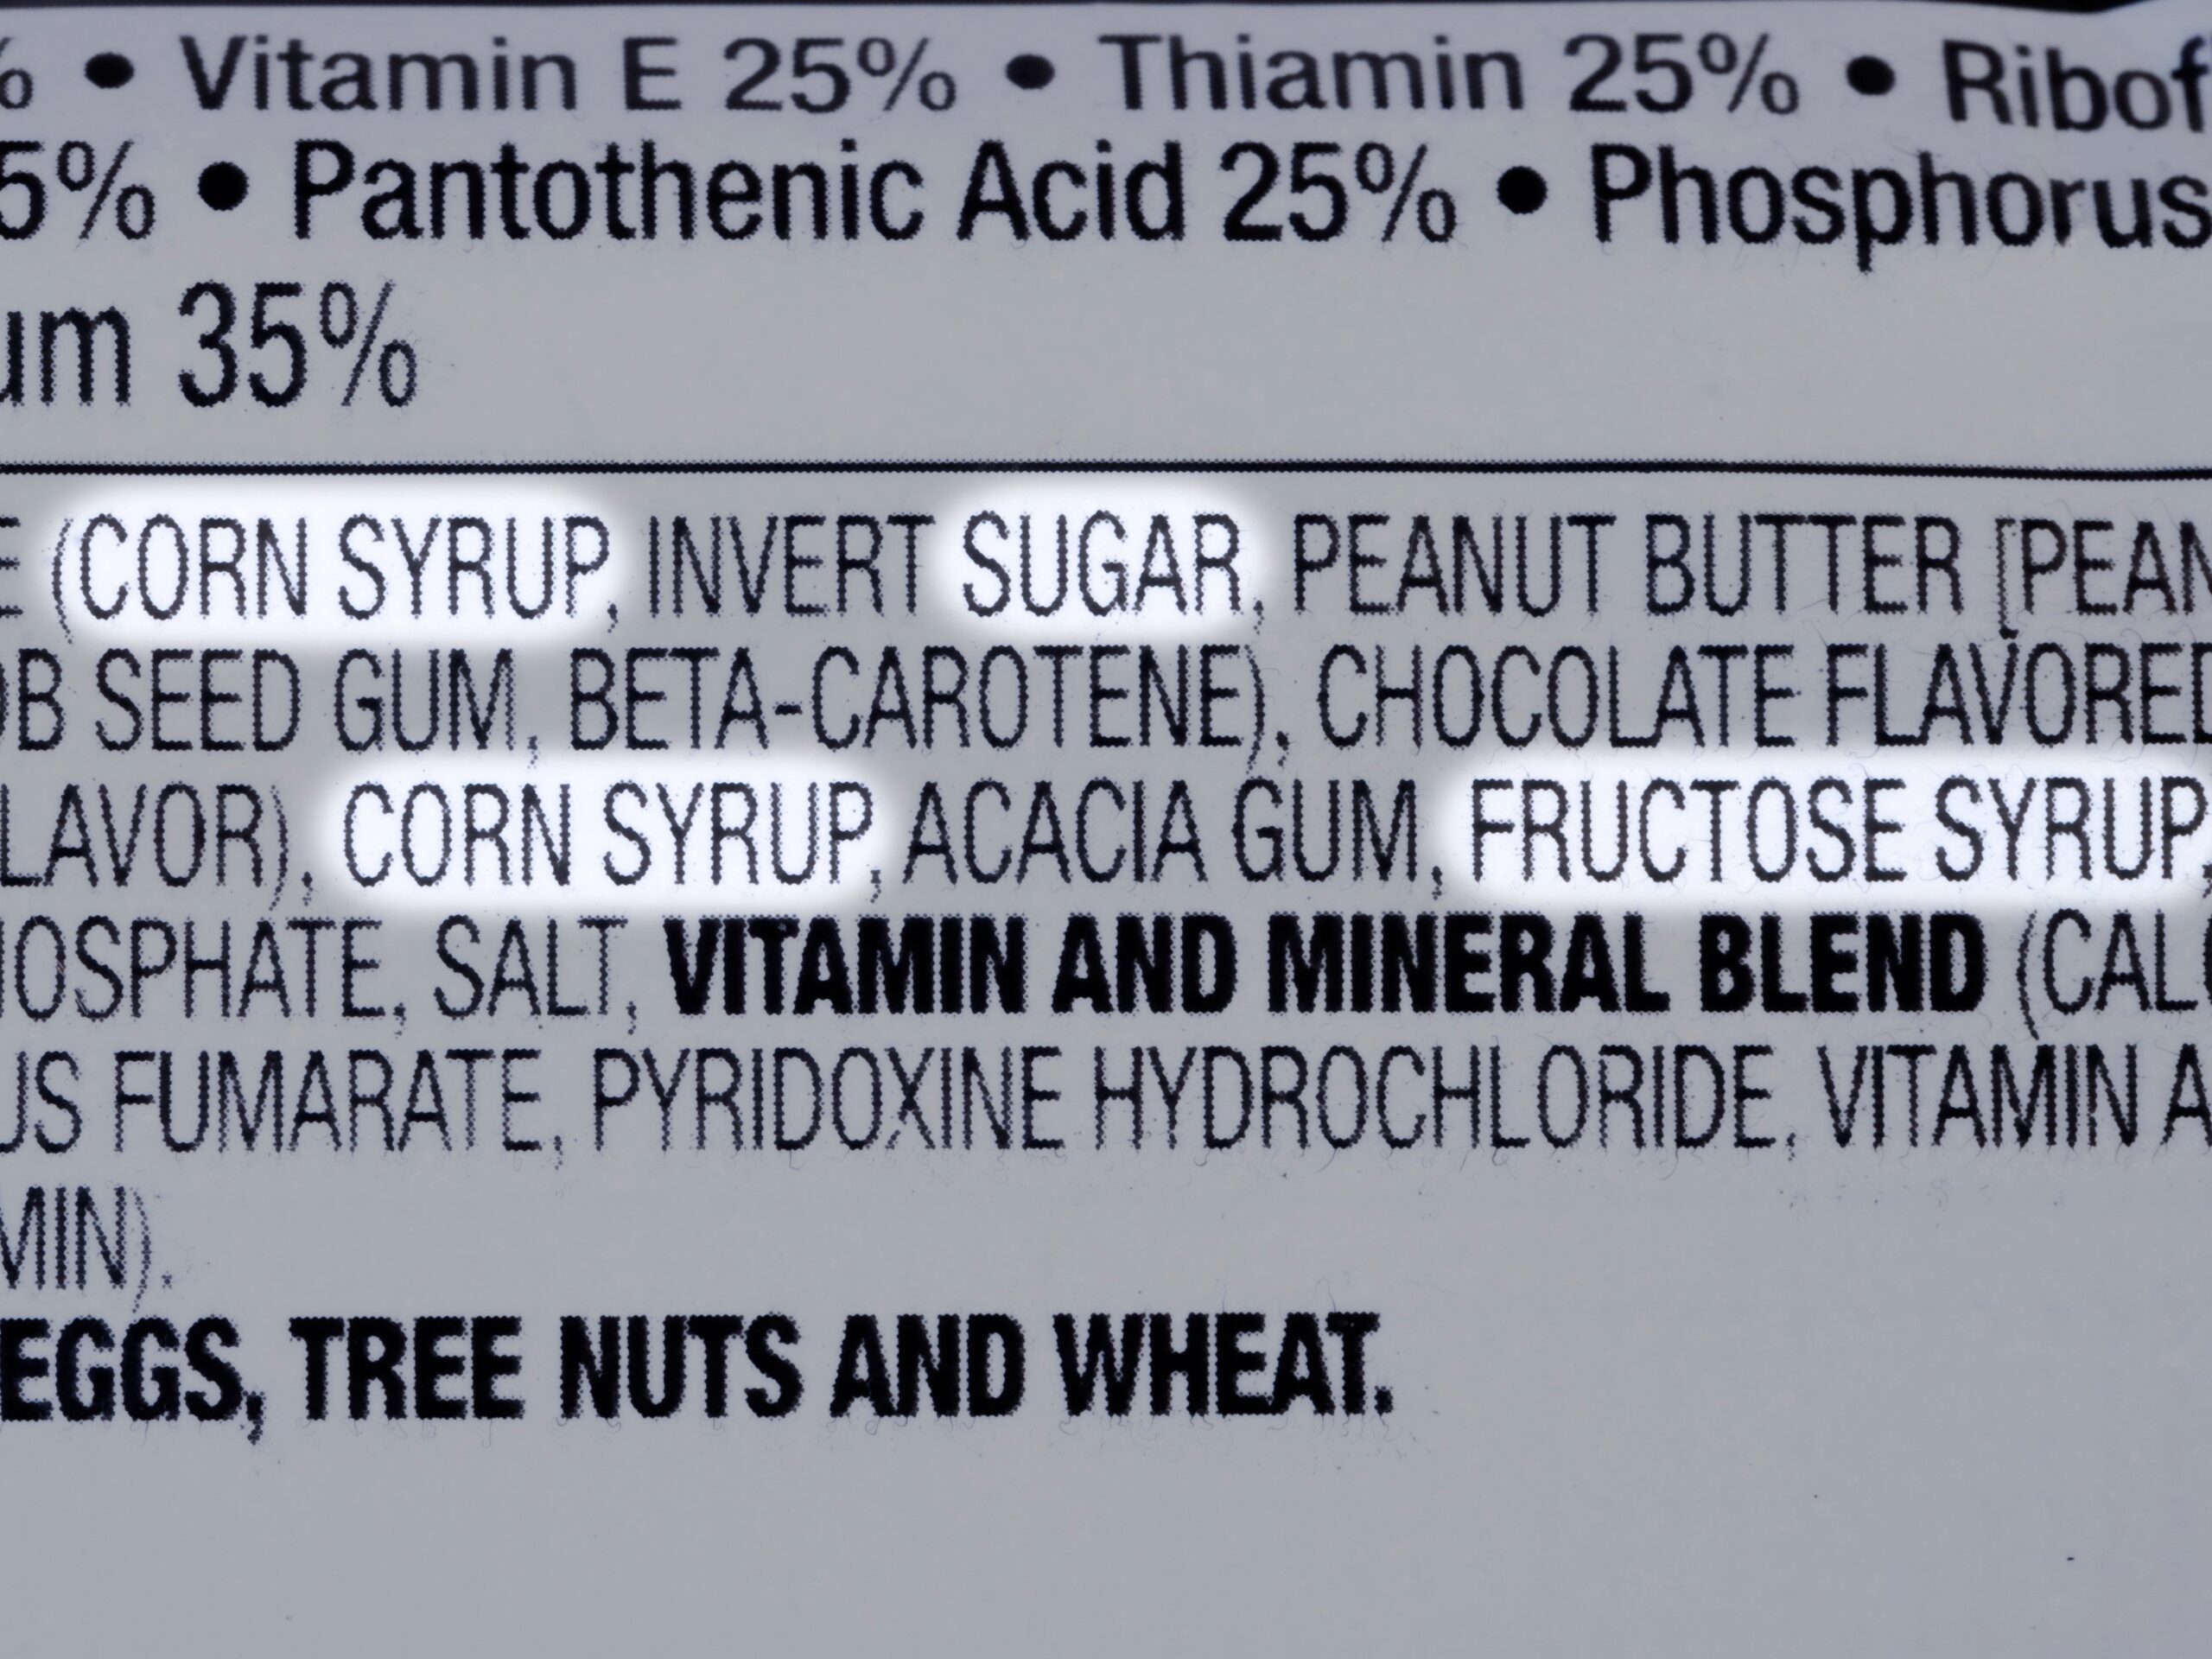 MERCURY Contaminates High Fructose Corn Syrup